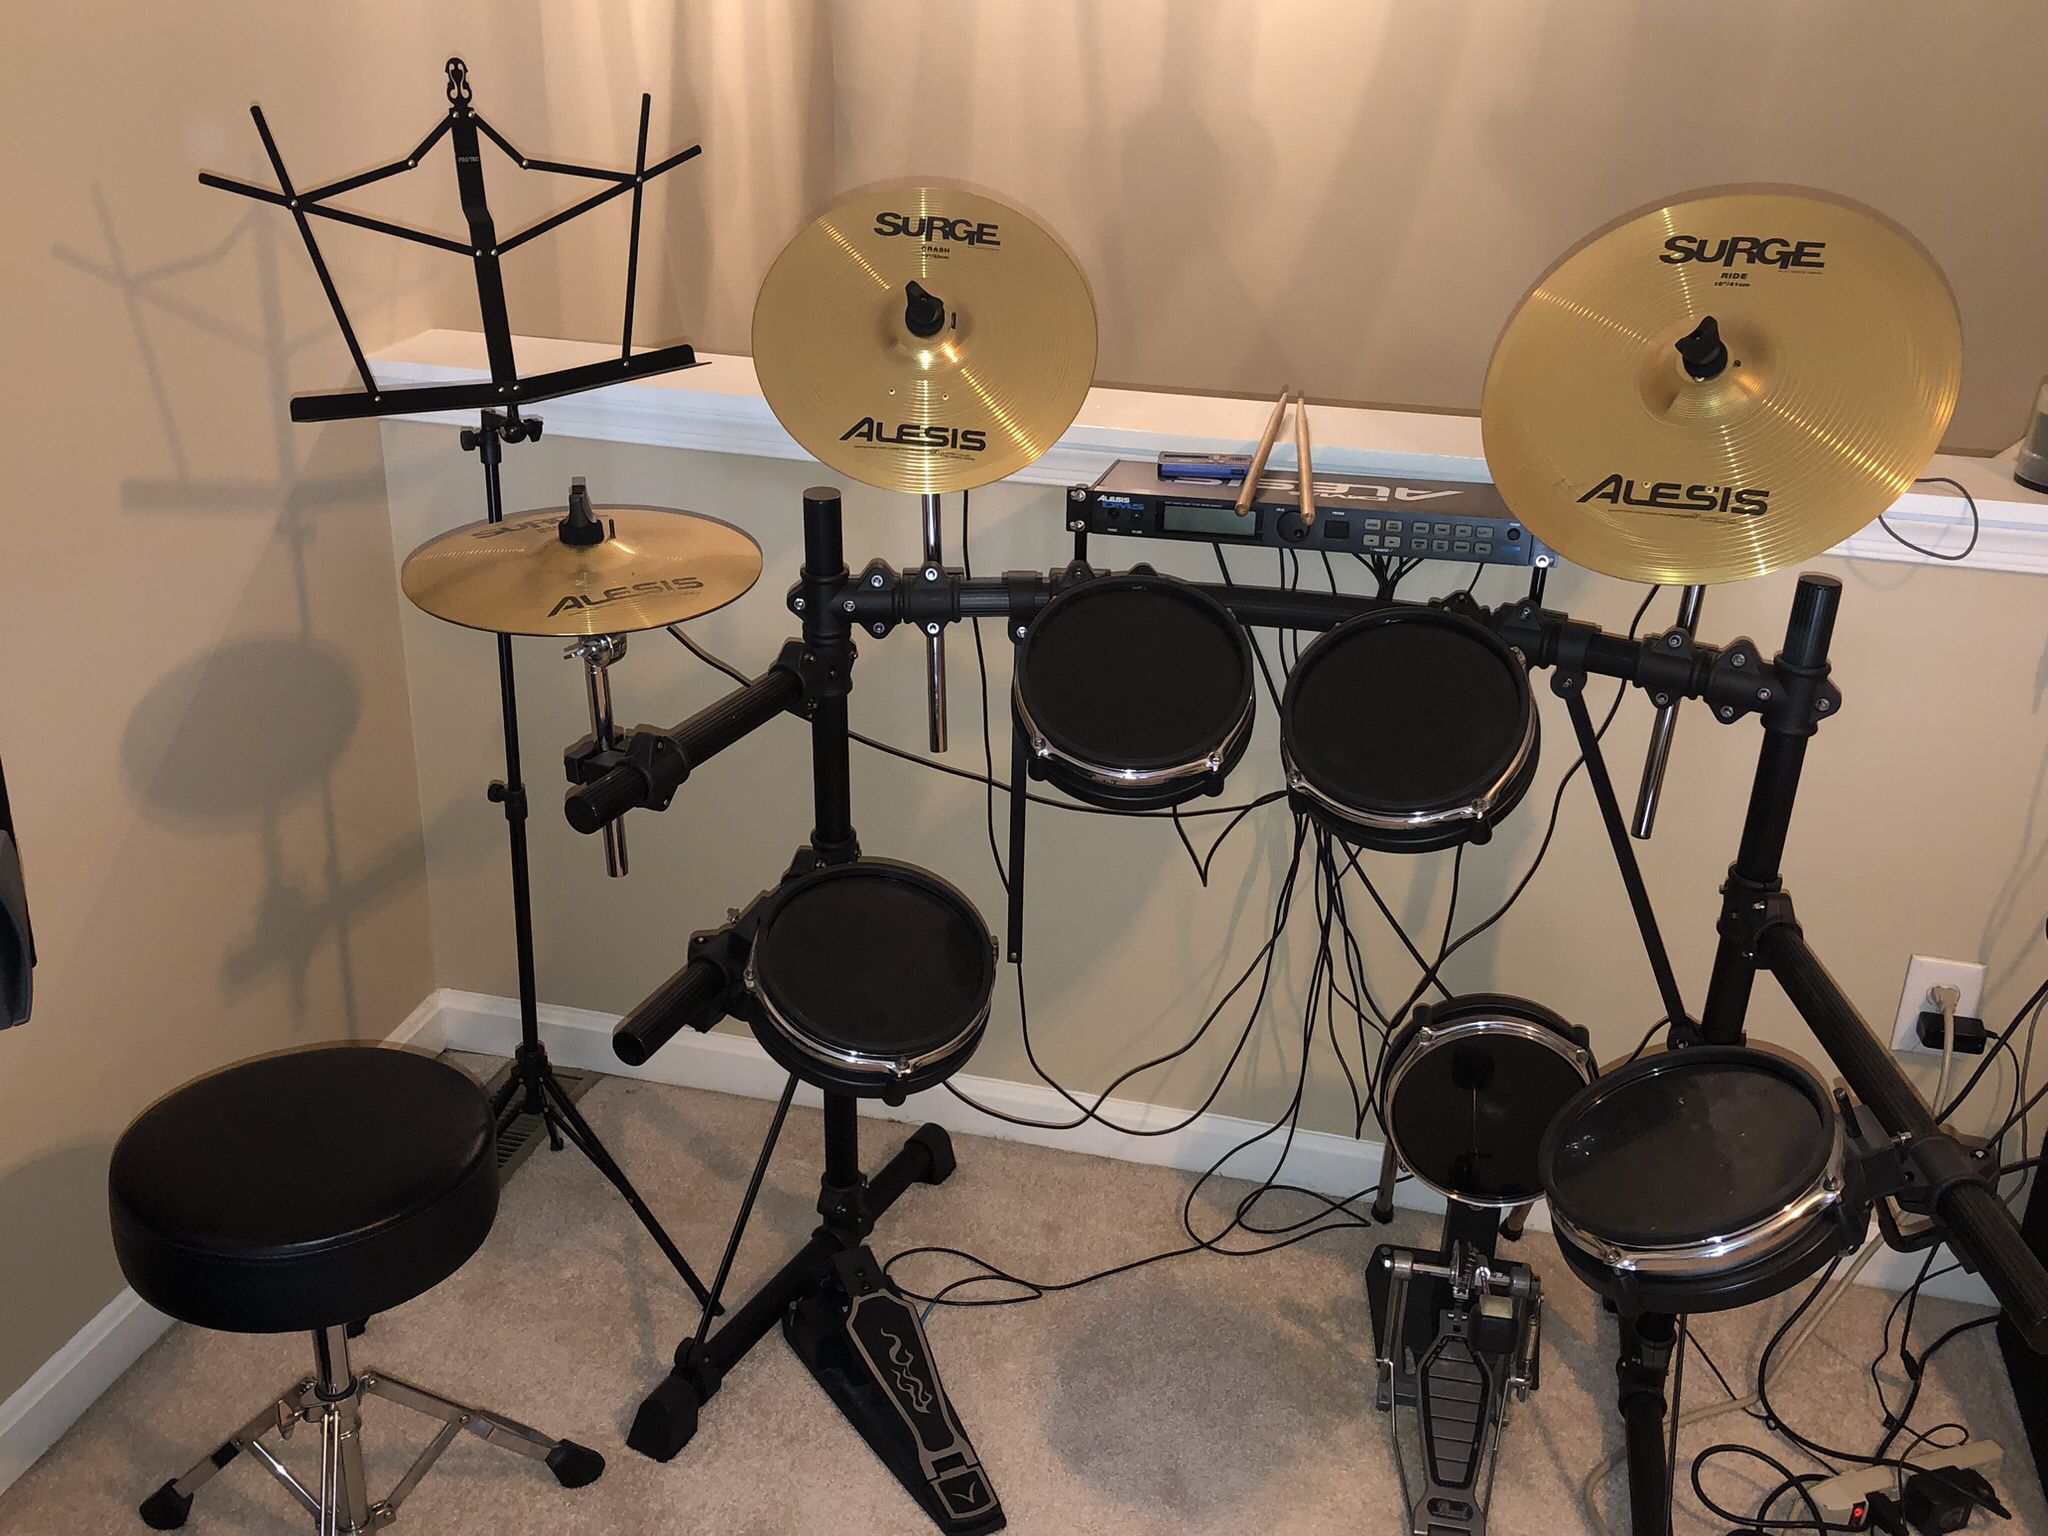 Alesis DM5 Pro Drum Set with Surge Cymbals.